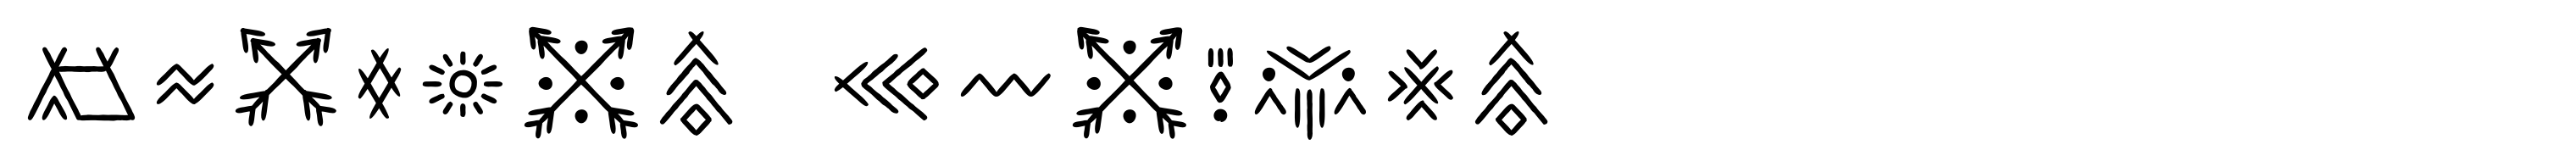 Wigwams Symbols